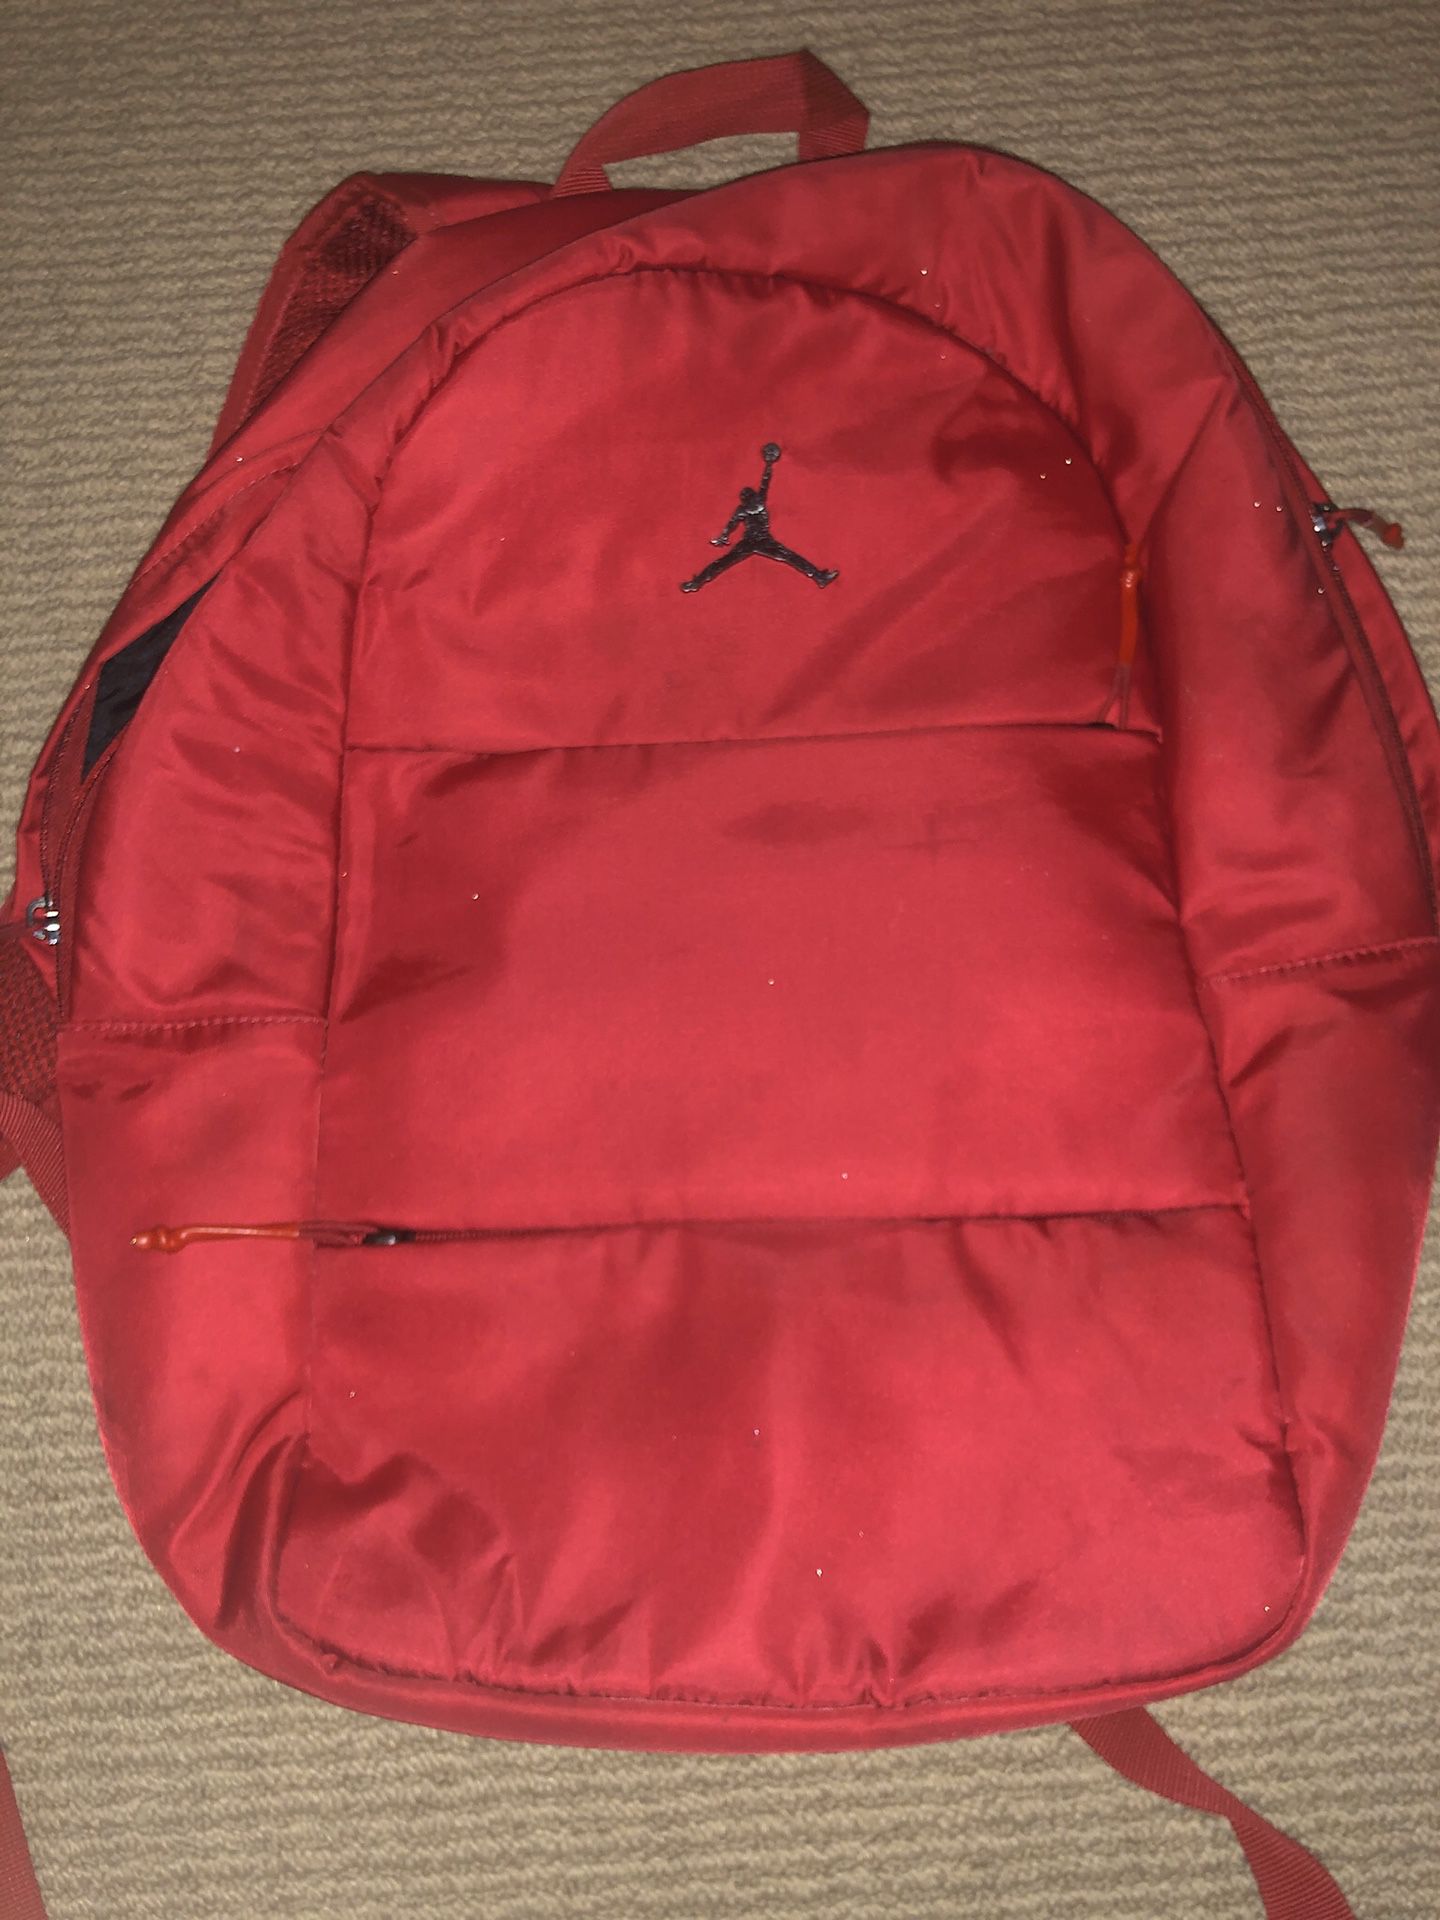 Red jordan backpack